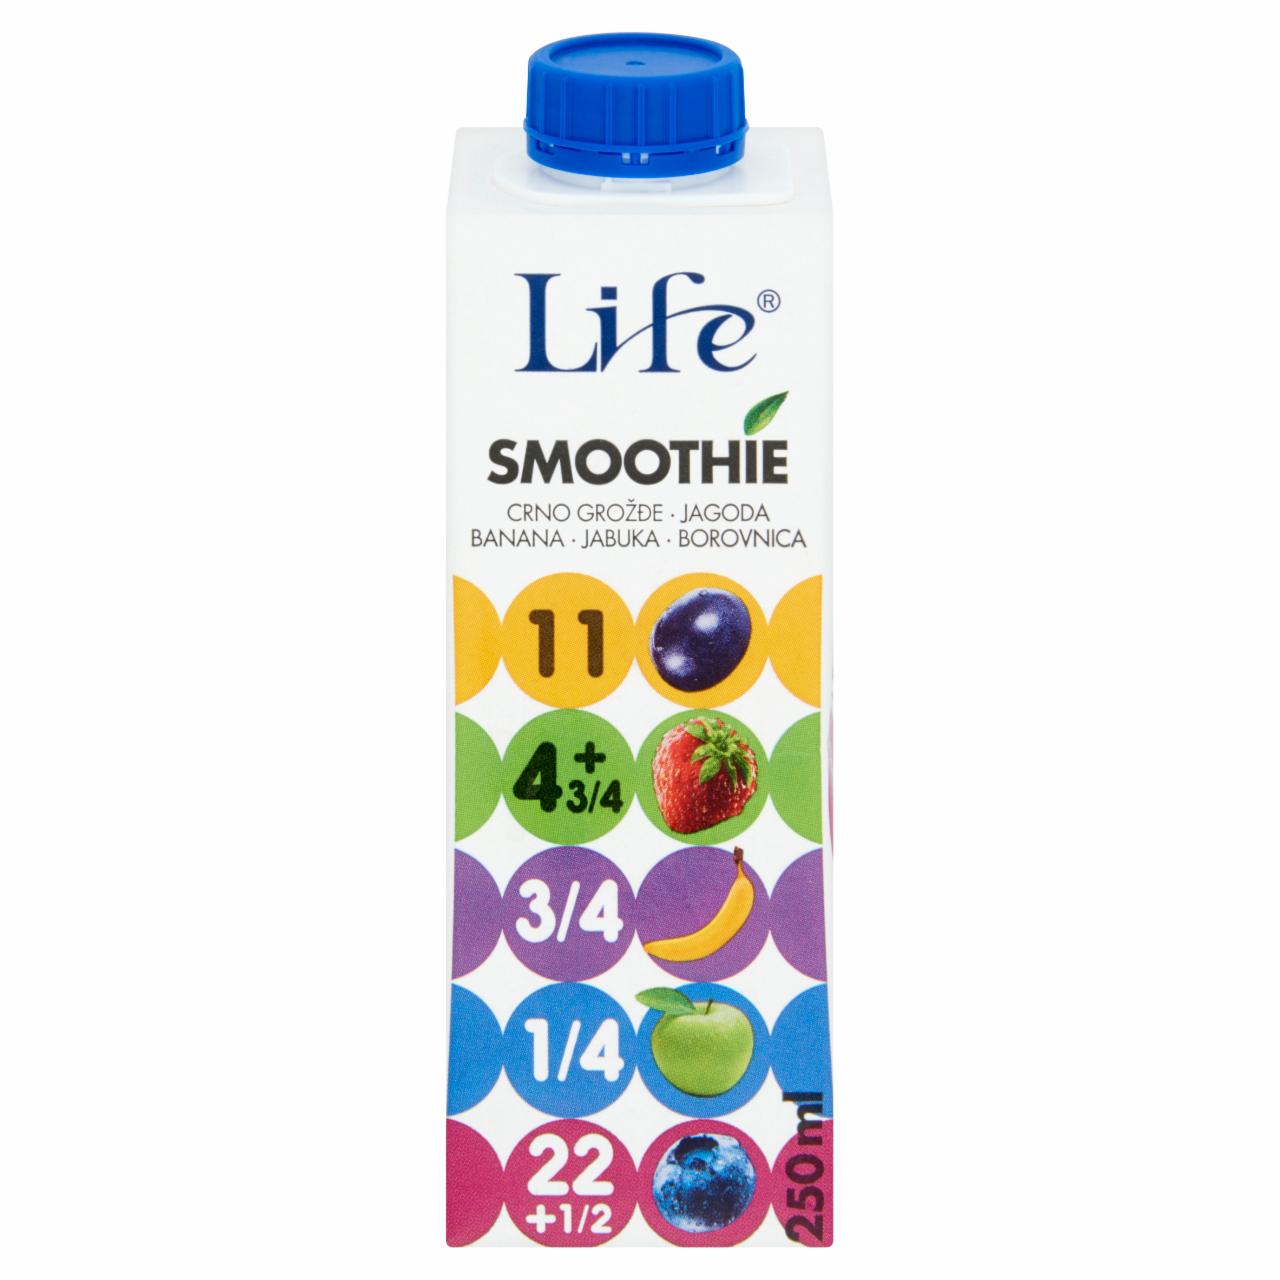 Képek - Life Smoothie rostos földieper ital 250 ml